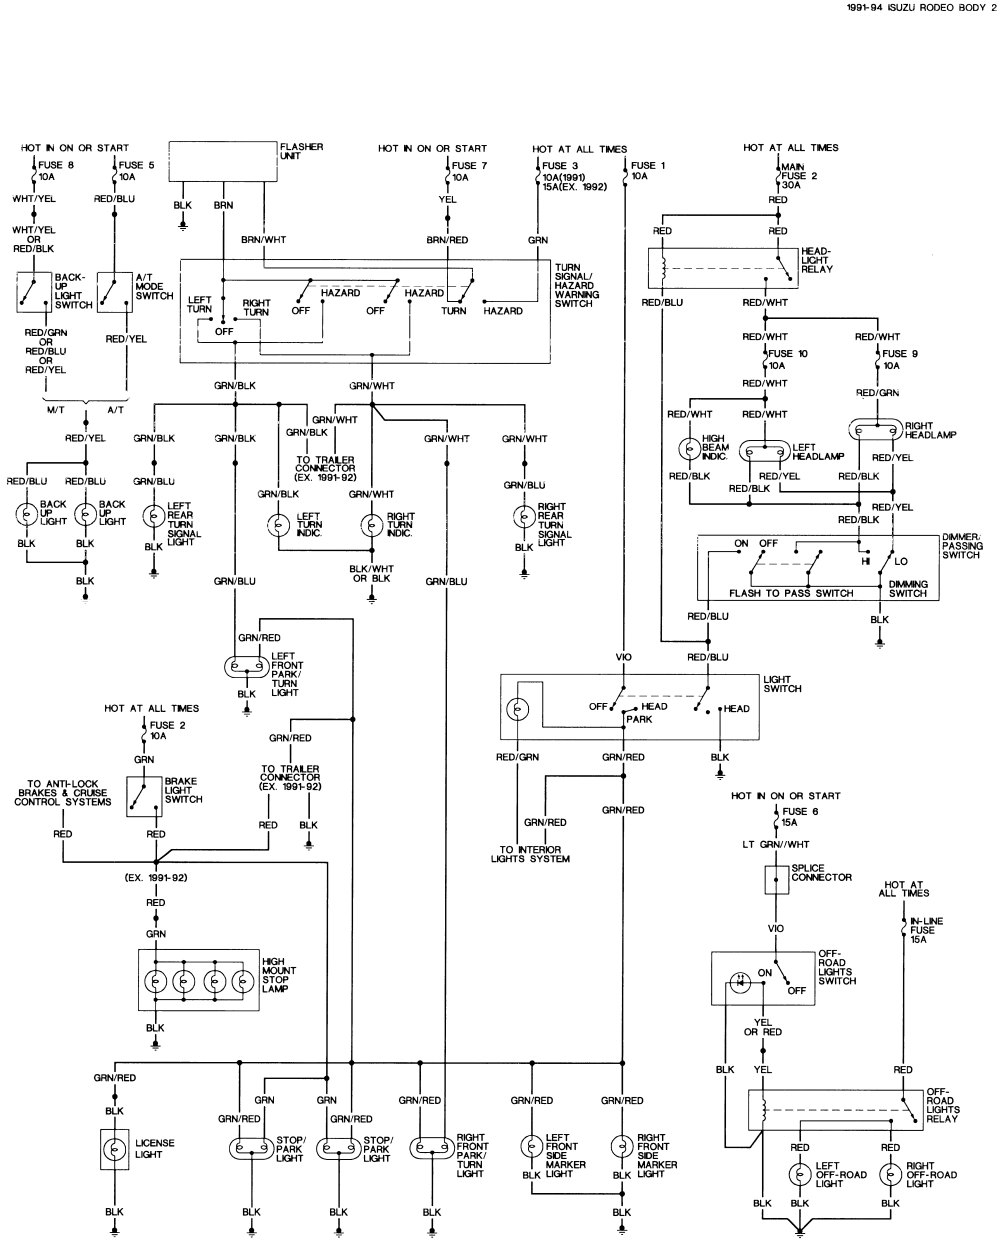 2007 freightliner columbia fuel gauge wiring diagram